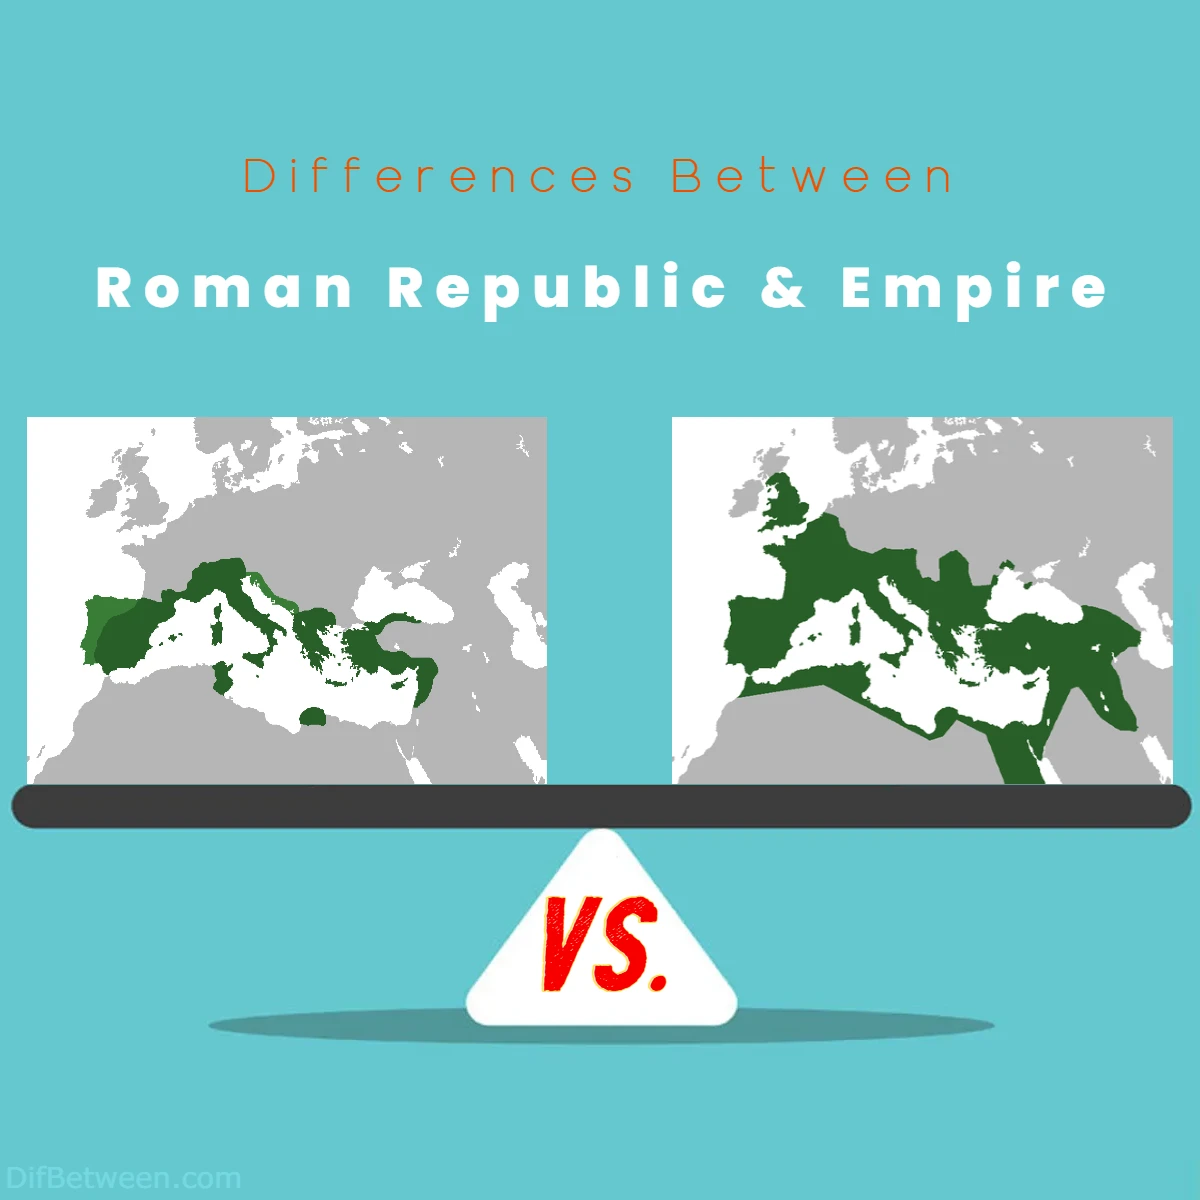 Differences Between Roman Republic vs Empire